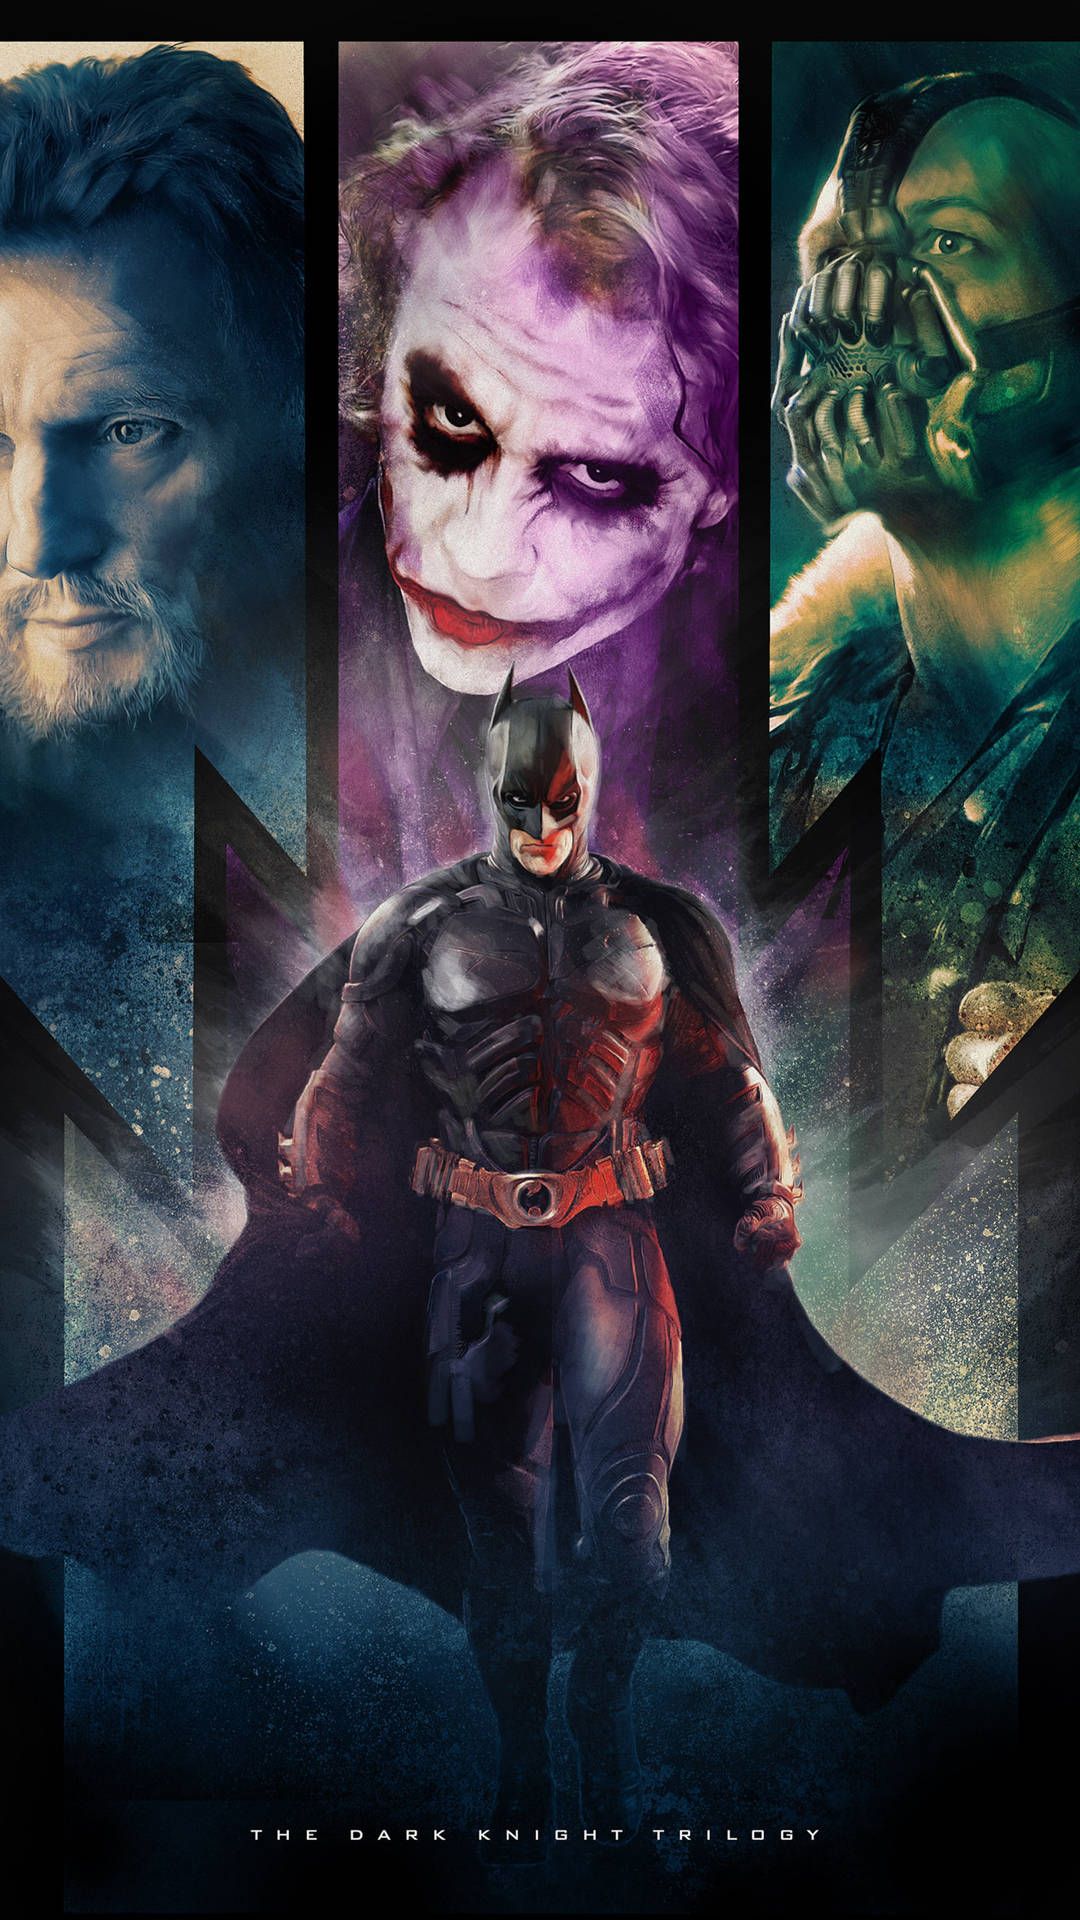 The Dark Knight Hintergrundbild 1080x1920. Download The Dark Knight Trilogy Aesthetic Fan Art Wallpaper